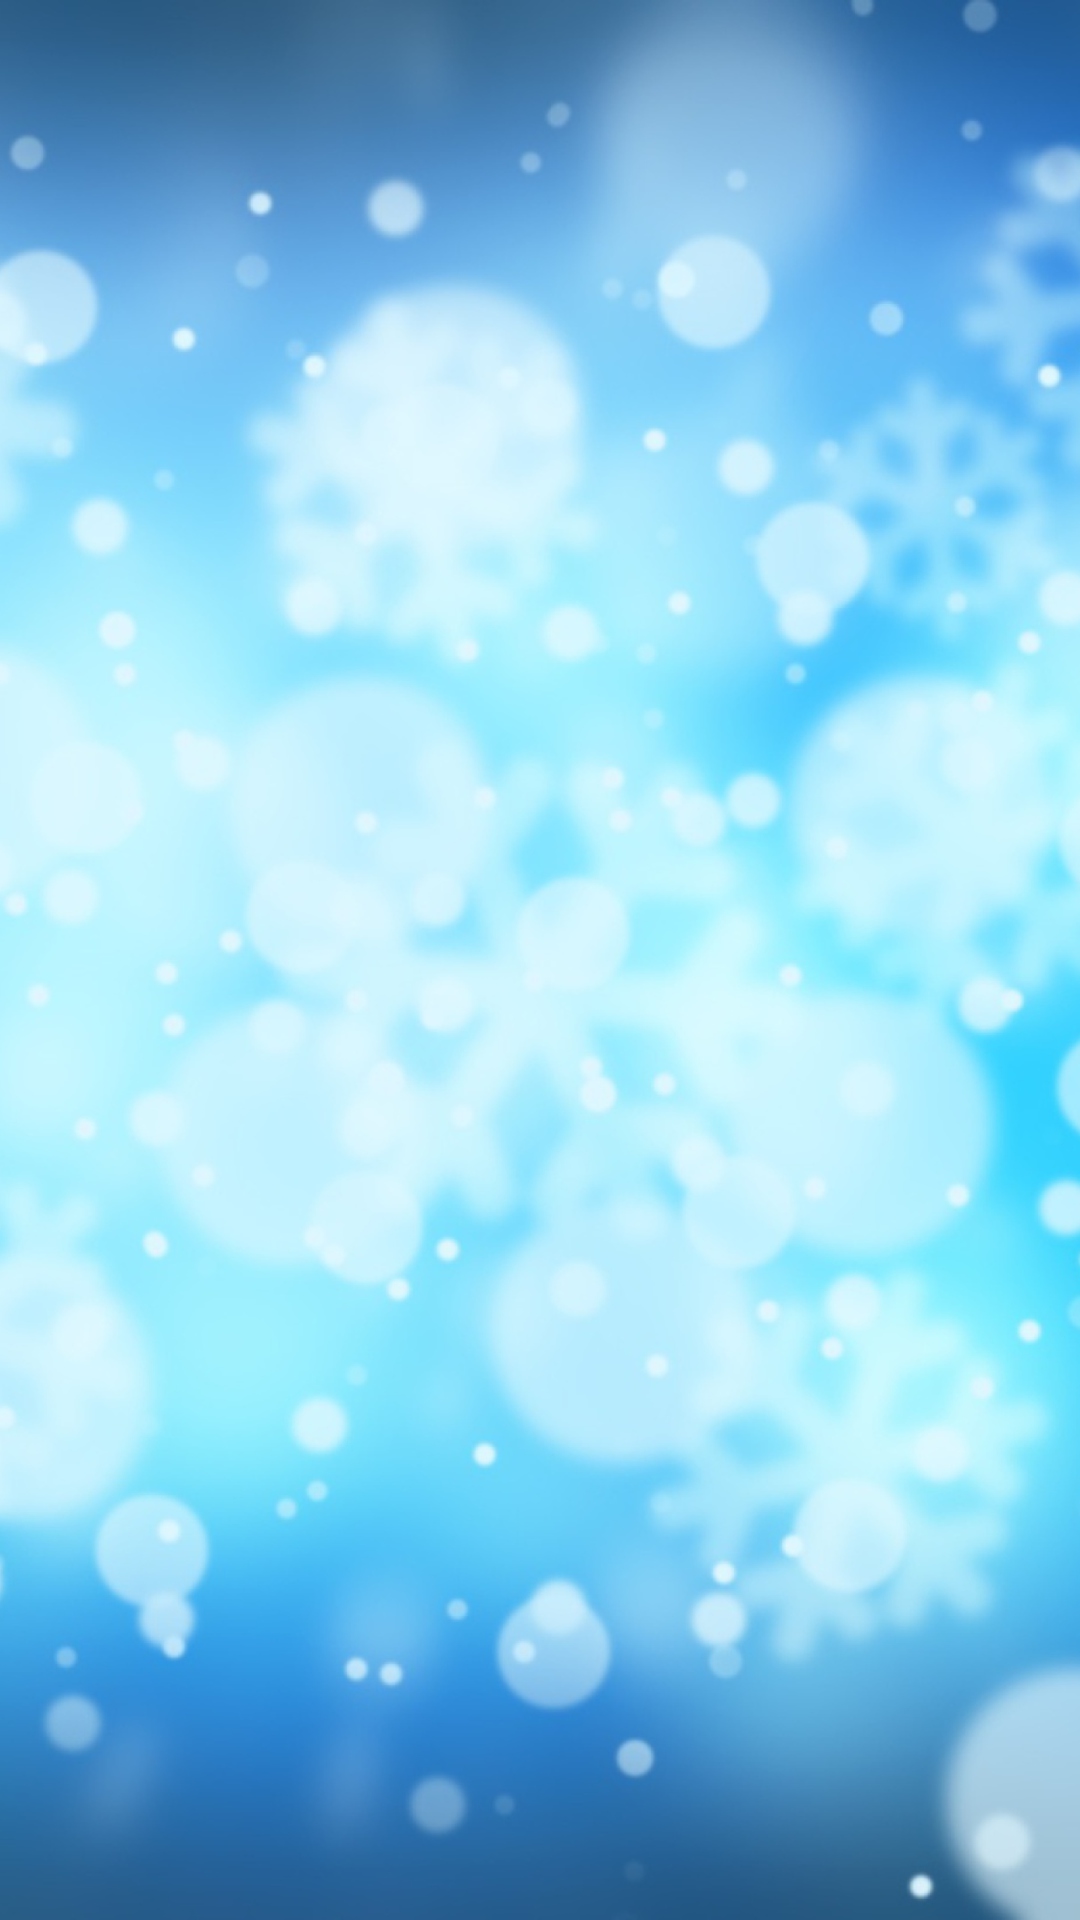 Snowflakes wallpaper 1080x1920